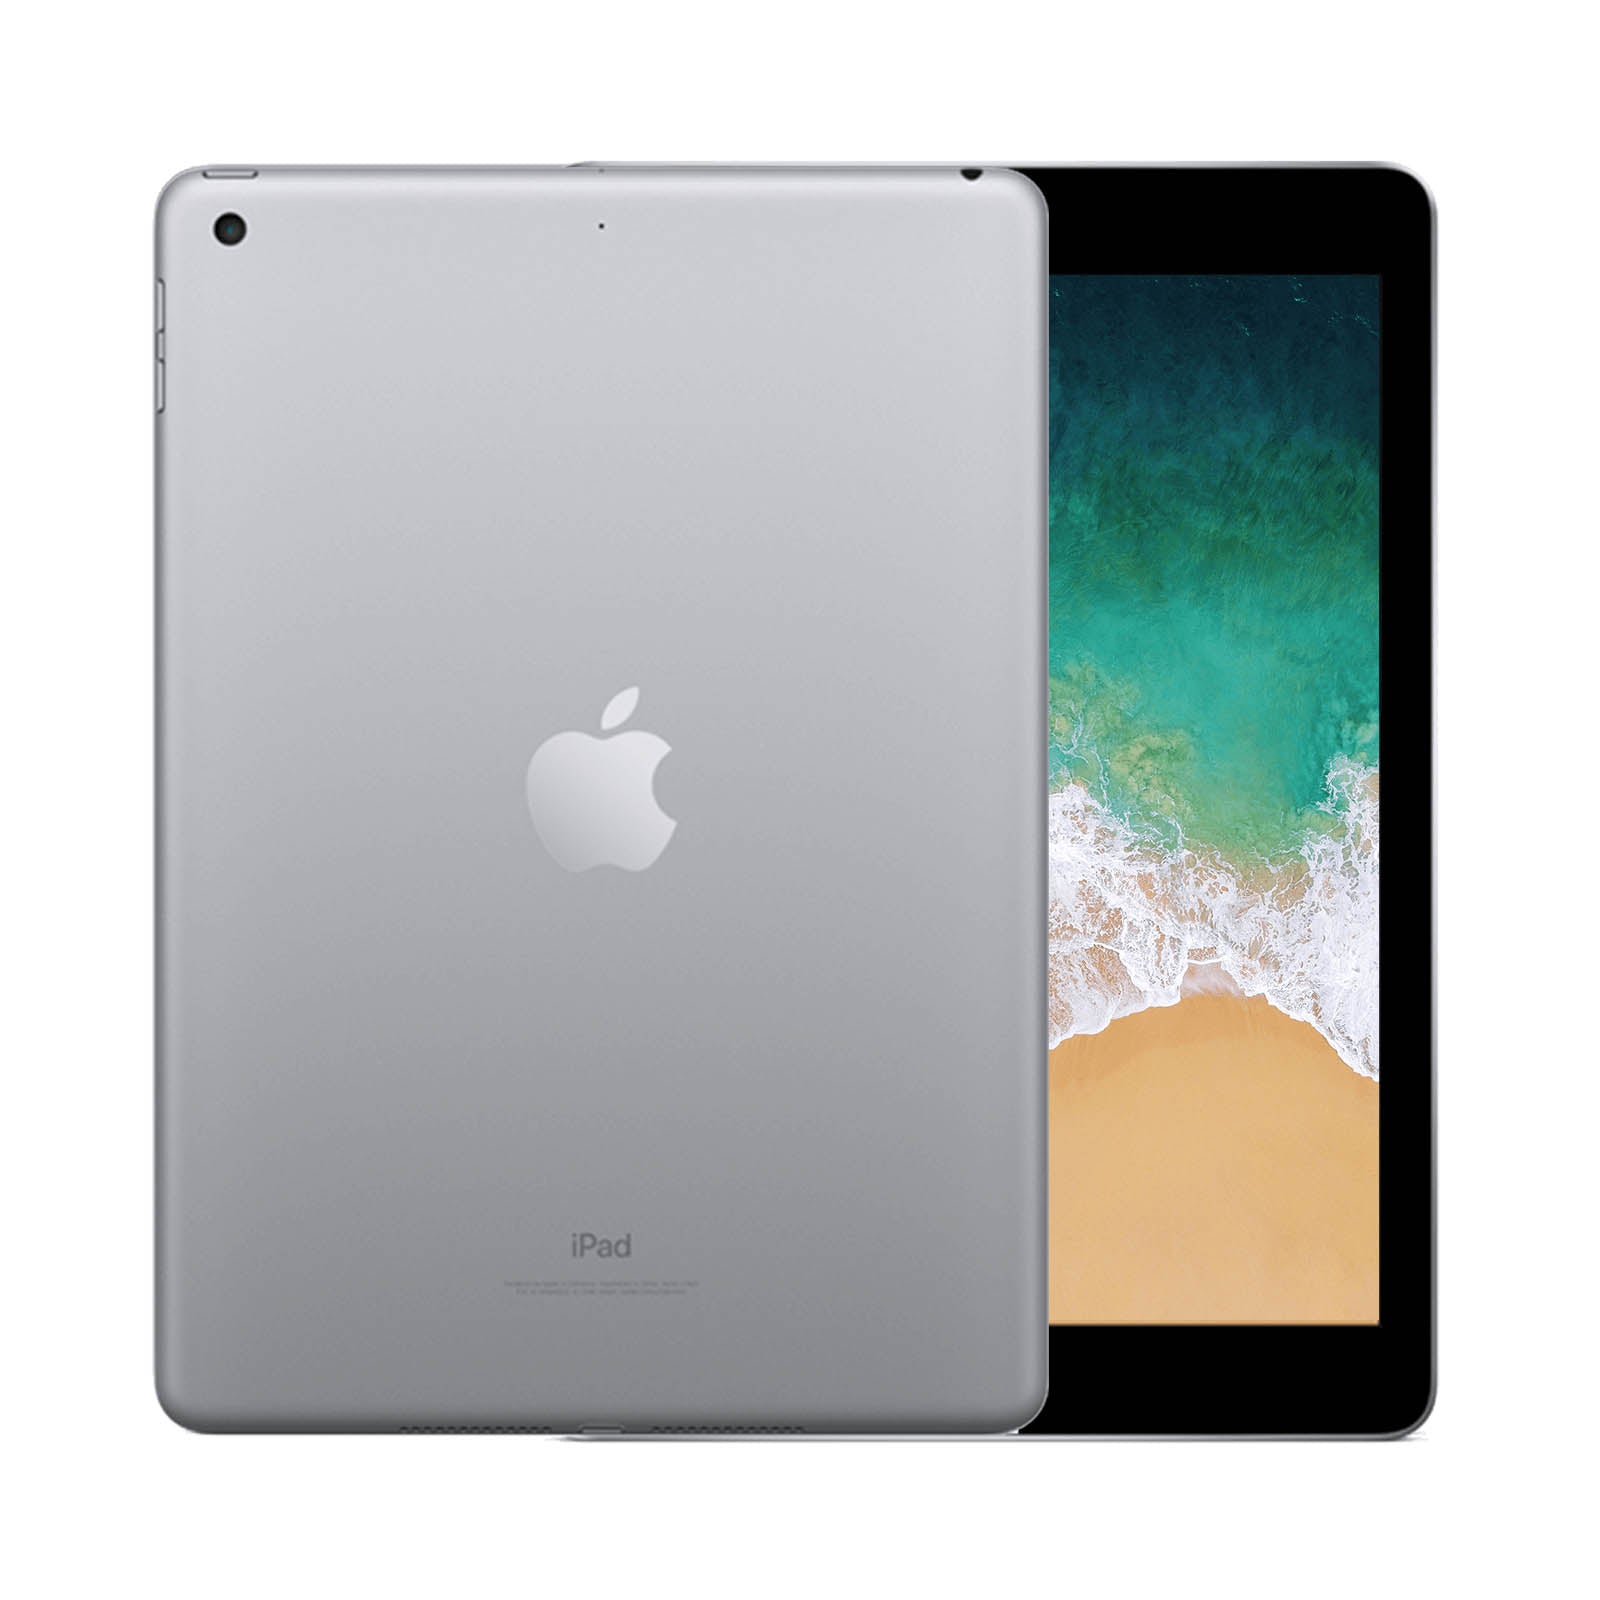 Apple iPad 5 32GB WiFi Space Grey - Very Good 32GB Space Grey Very Good